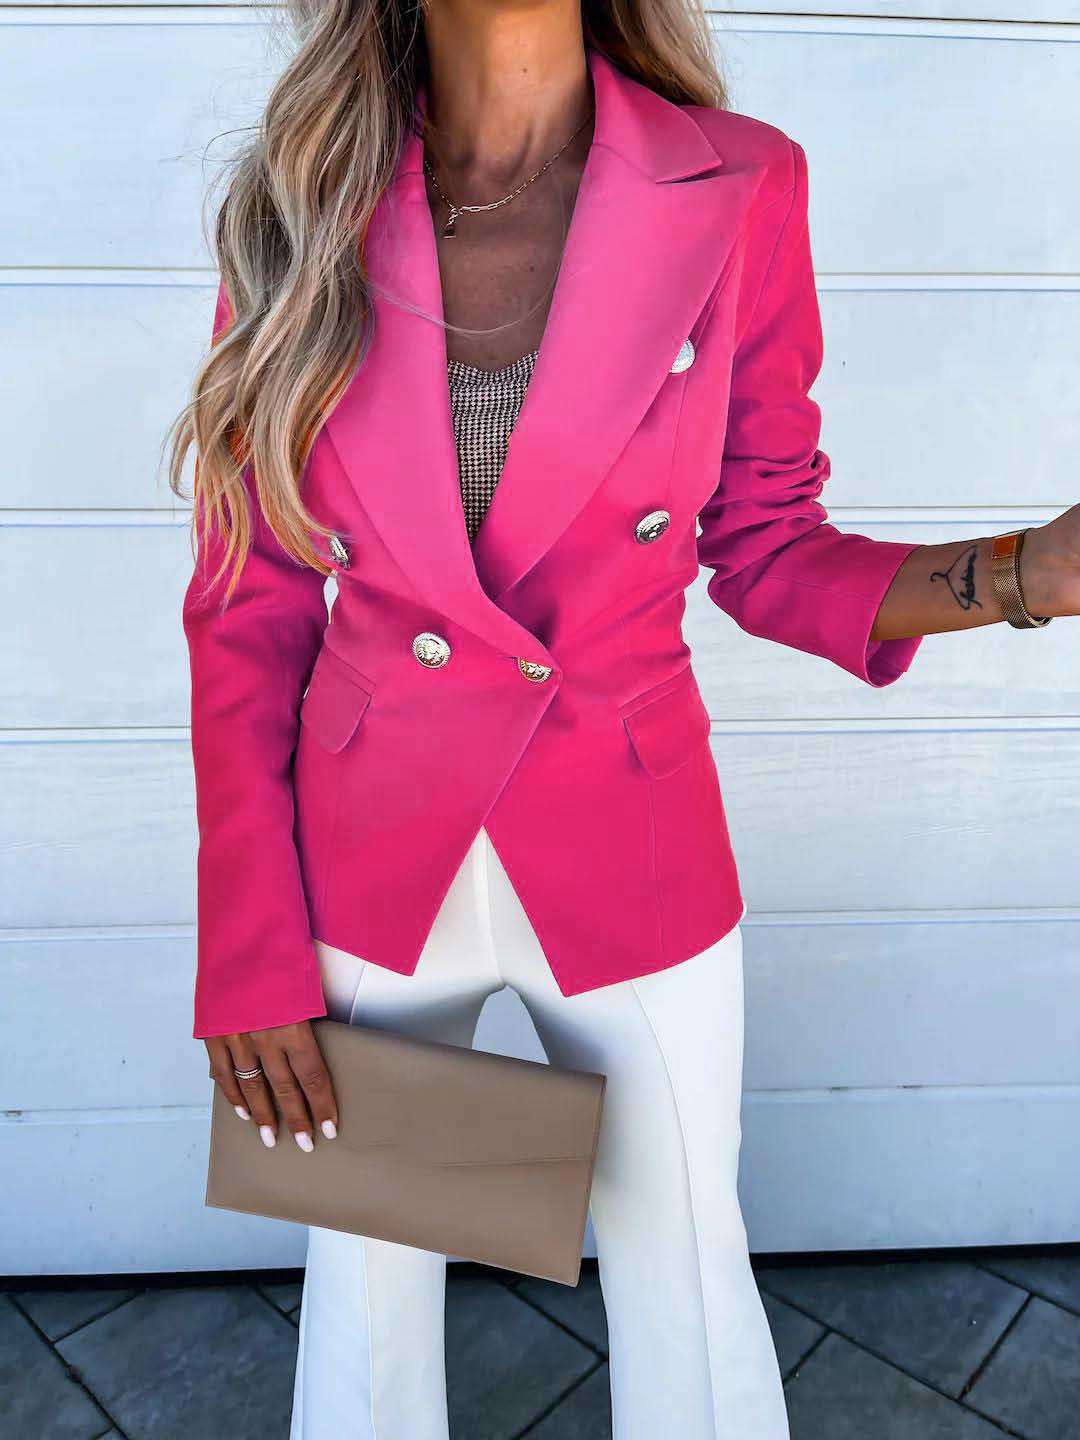 Taylor Fashion Office Ladies Solid Color Blazer